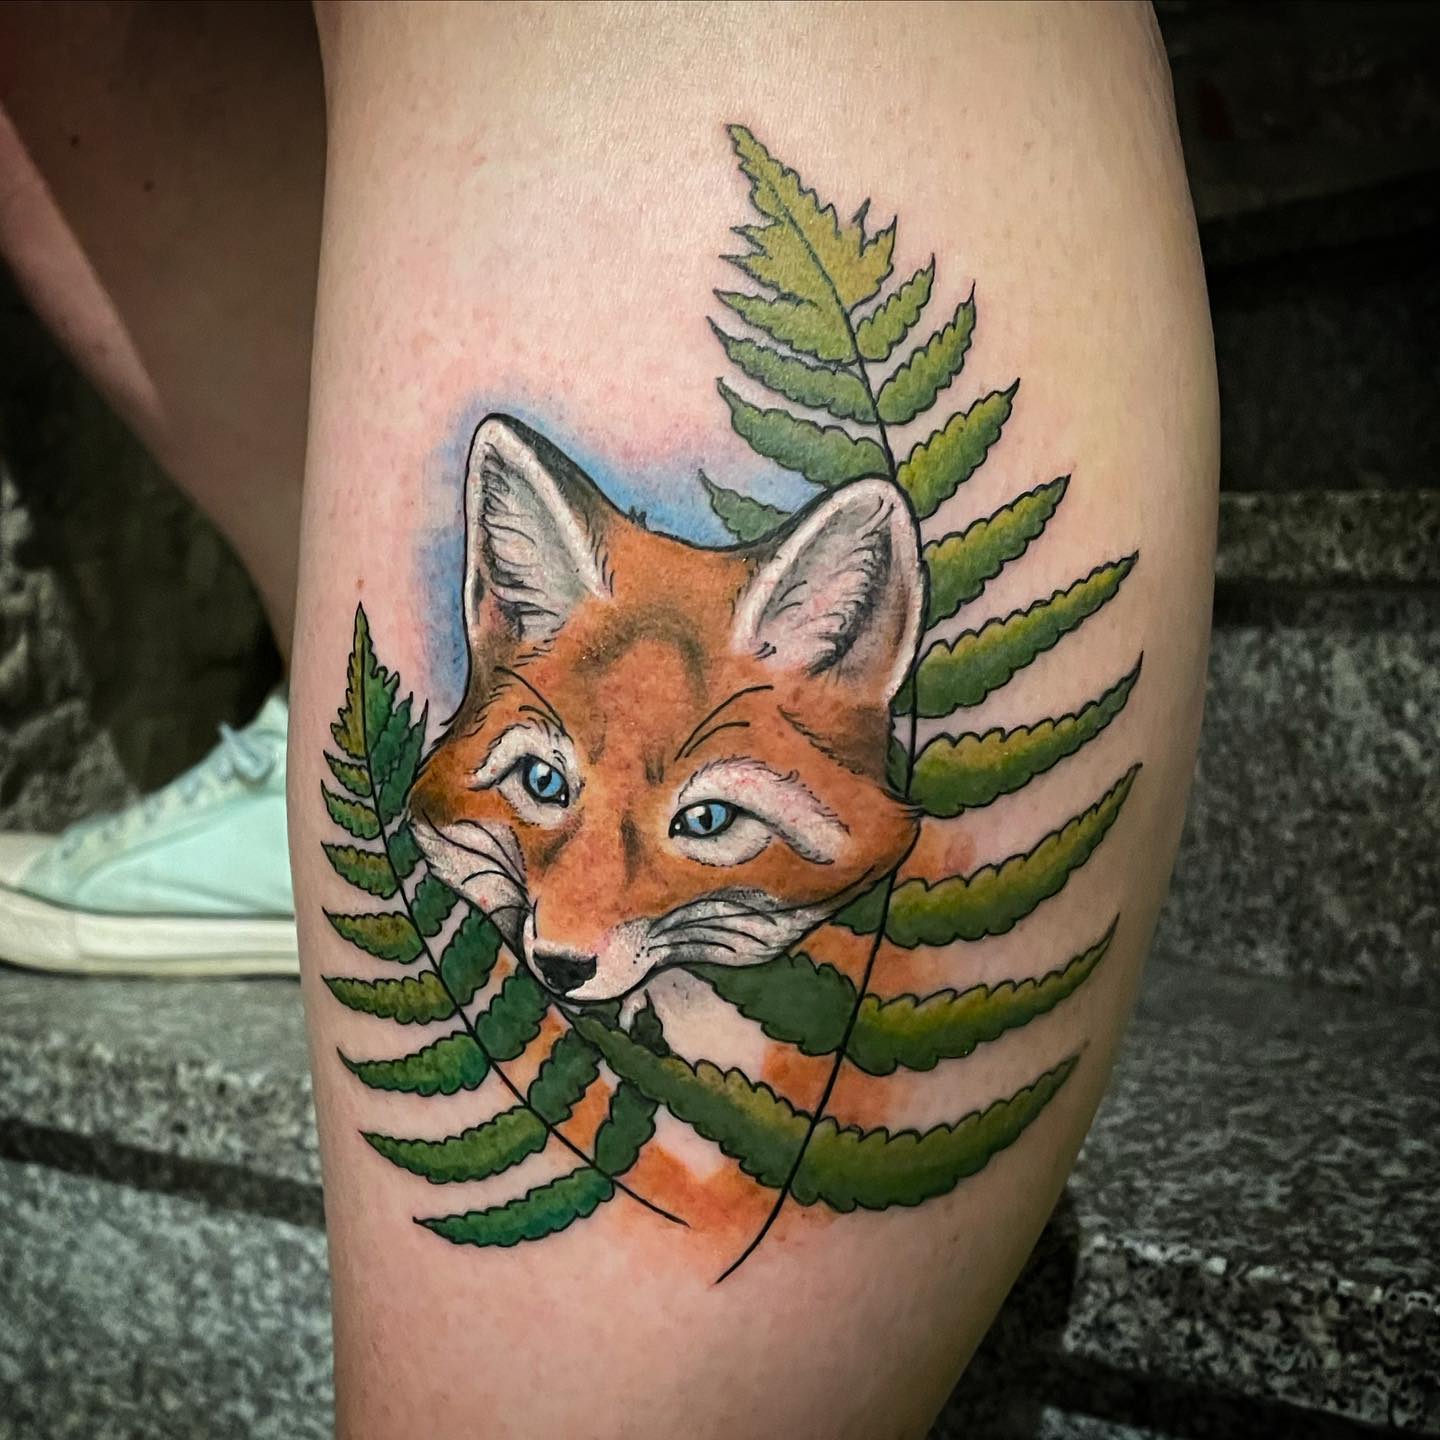 Fuchs und Farn  • •  #tattoo #tattoos #foxtattoo #fox #girlswithtattoos #ink #in